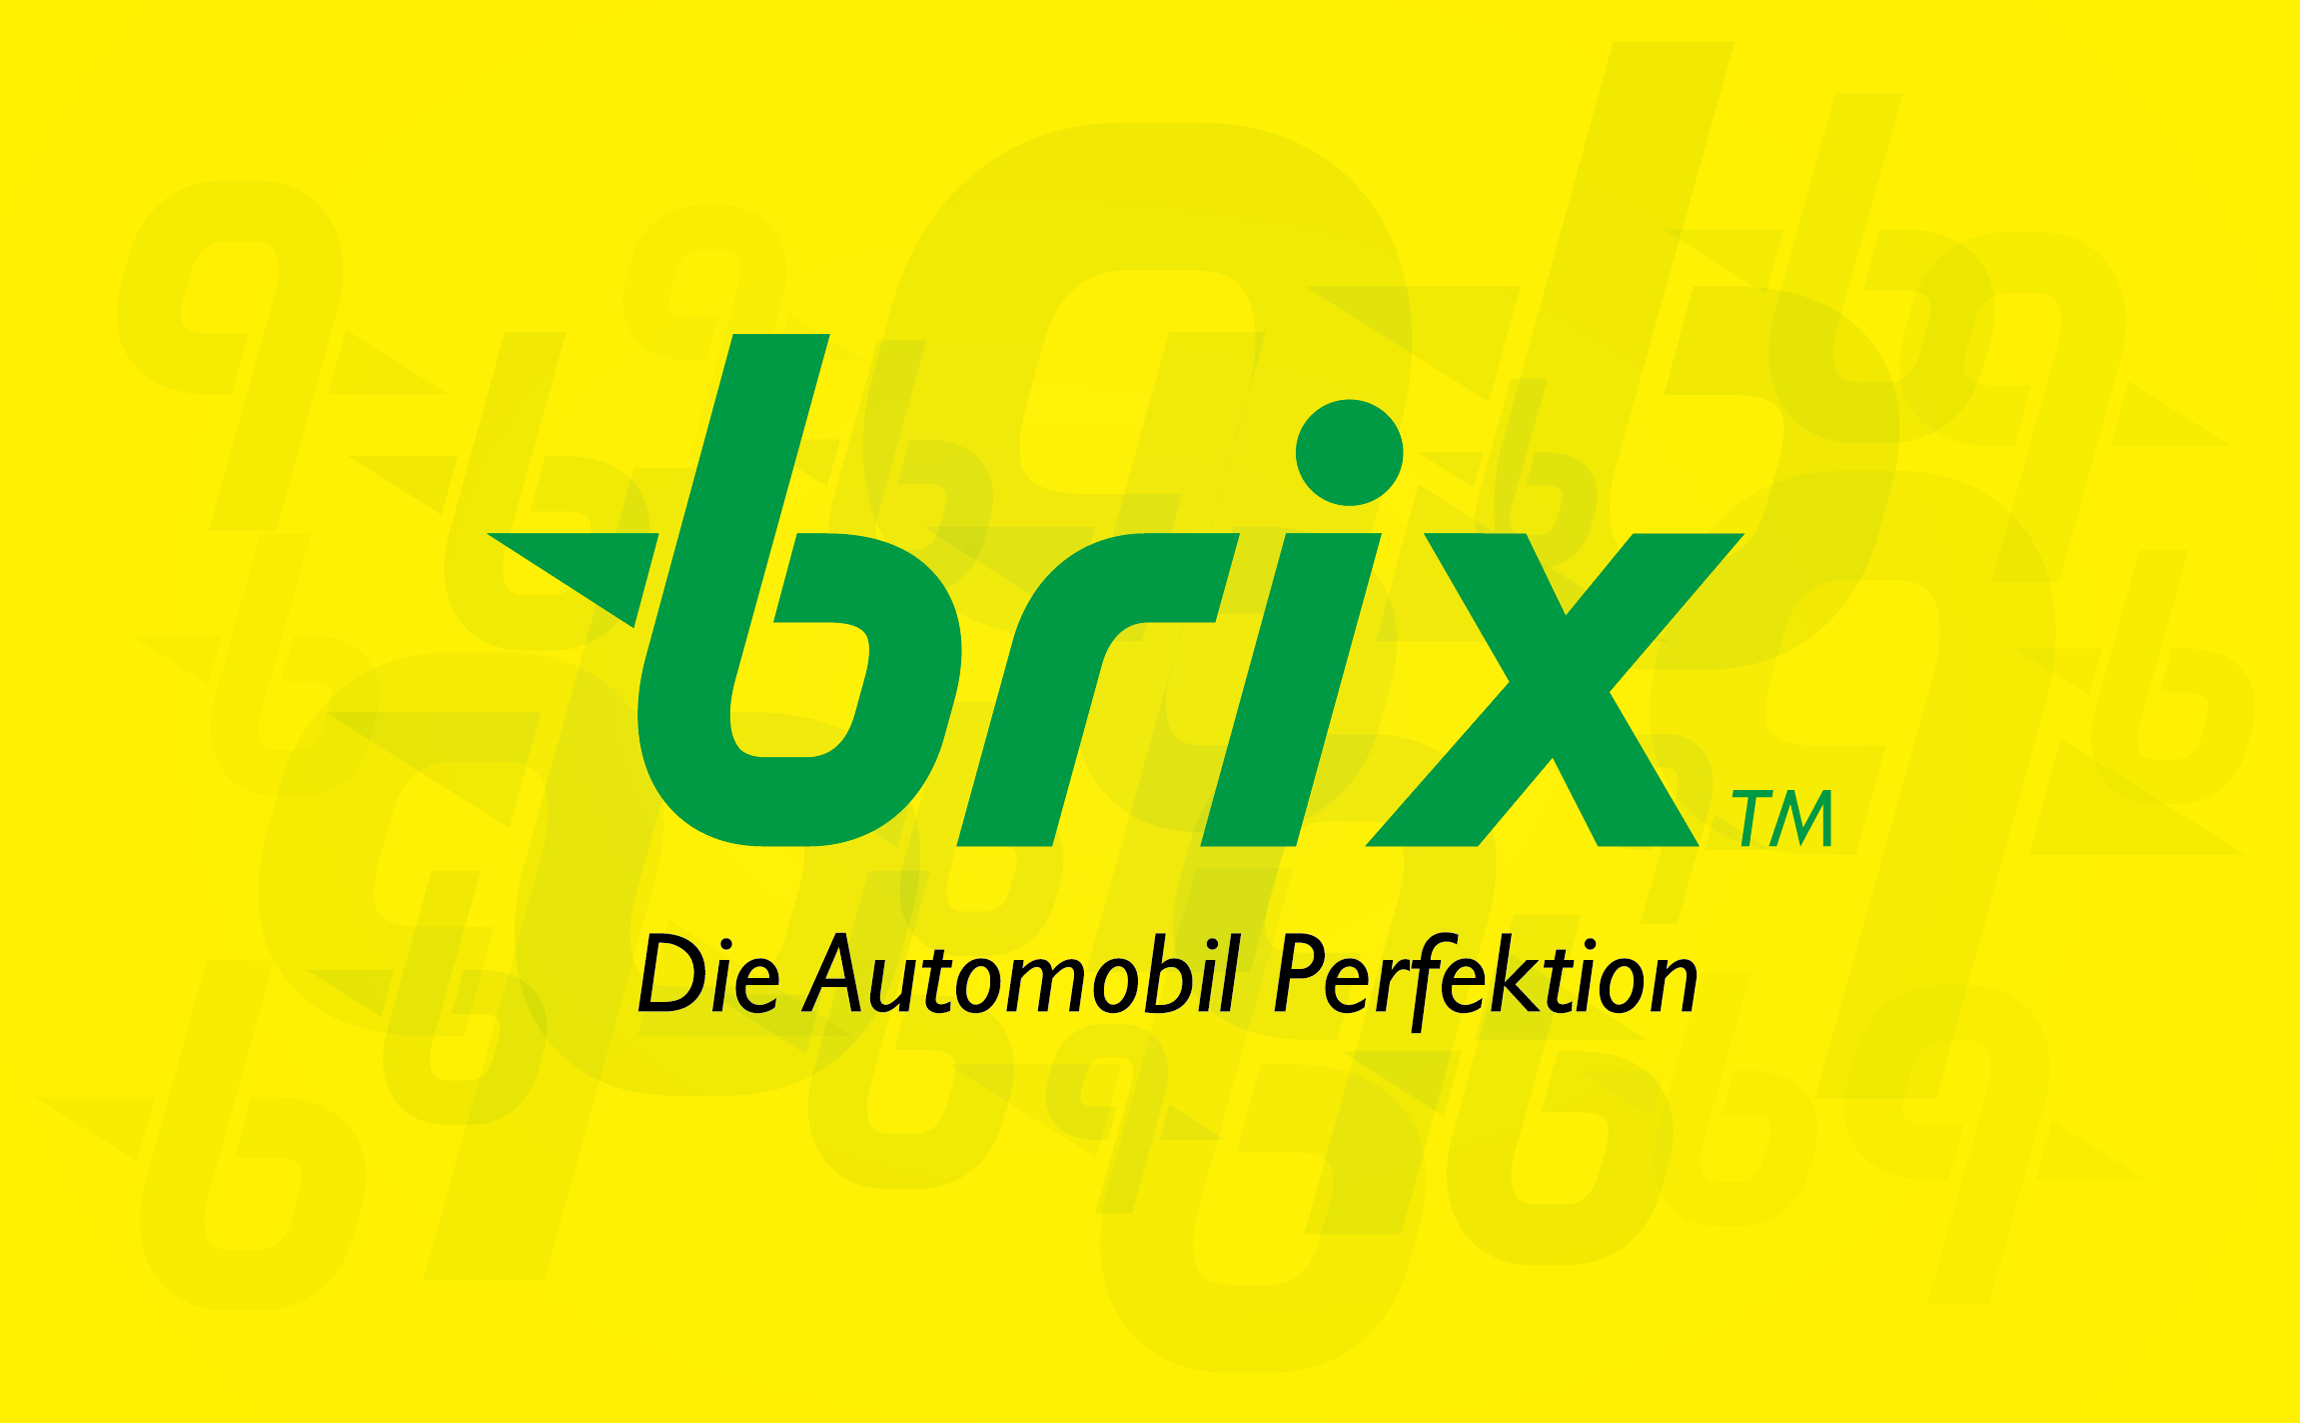 Brix Brake System 대려인터내셔날 브랜드 & 아이덴터티